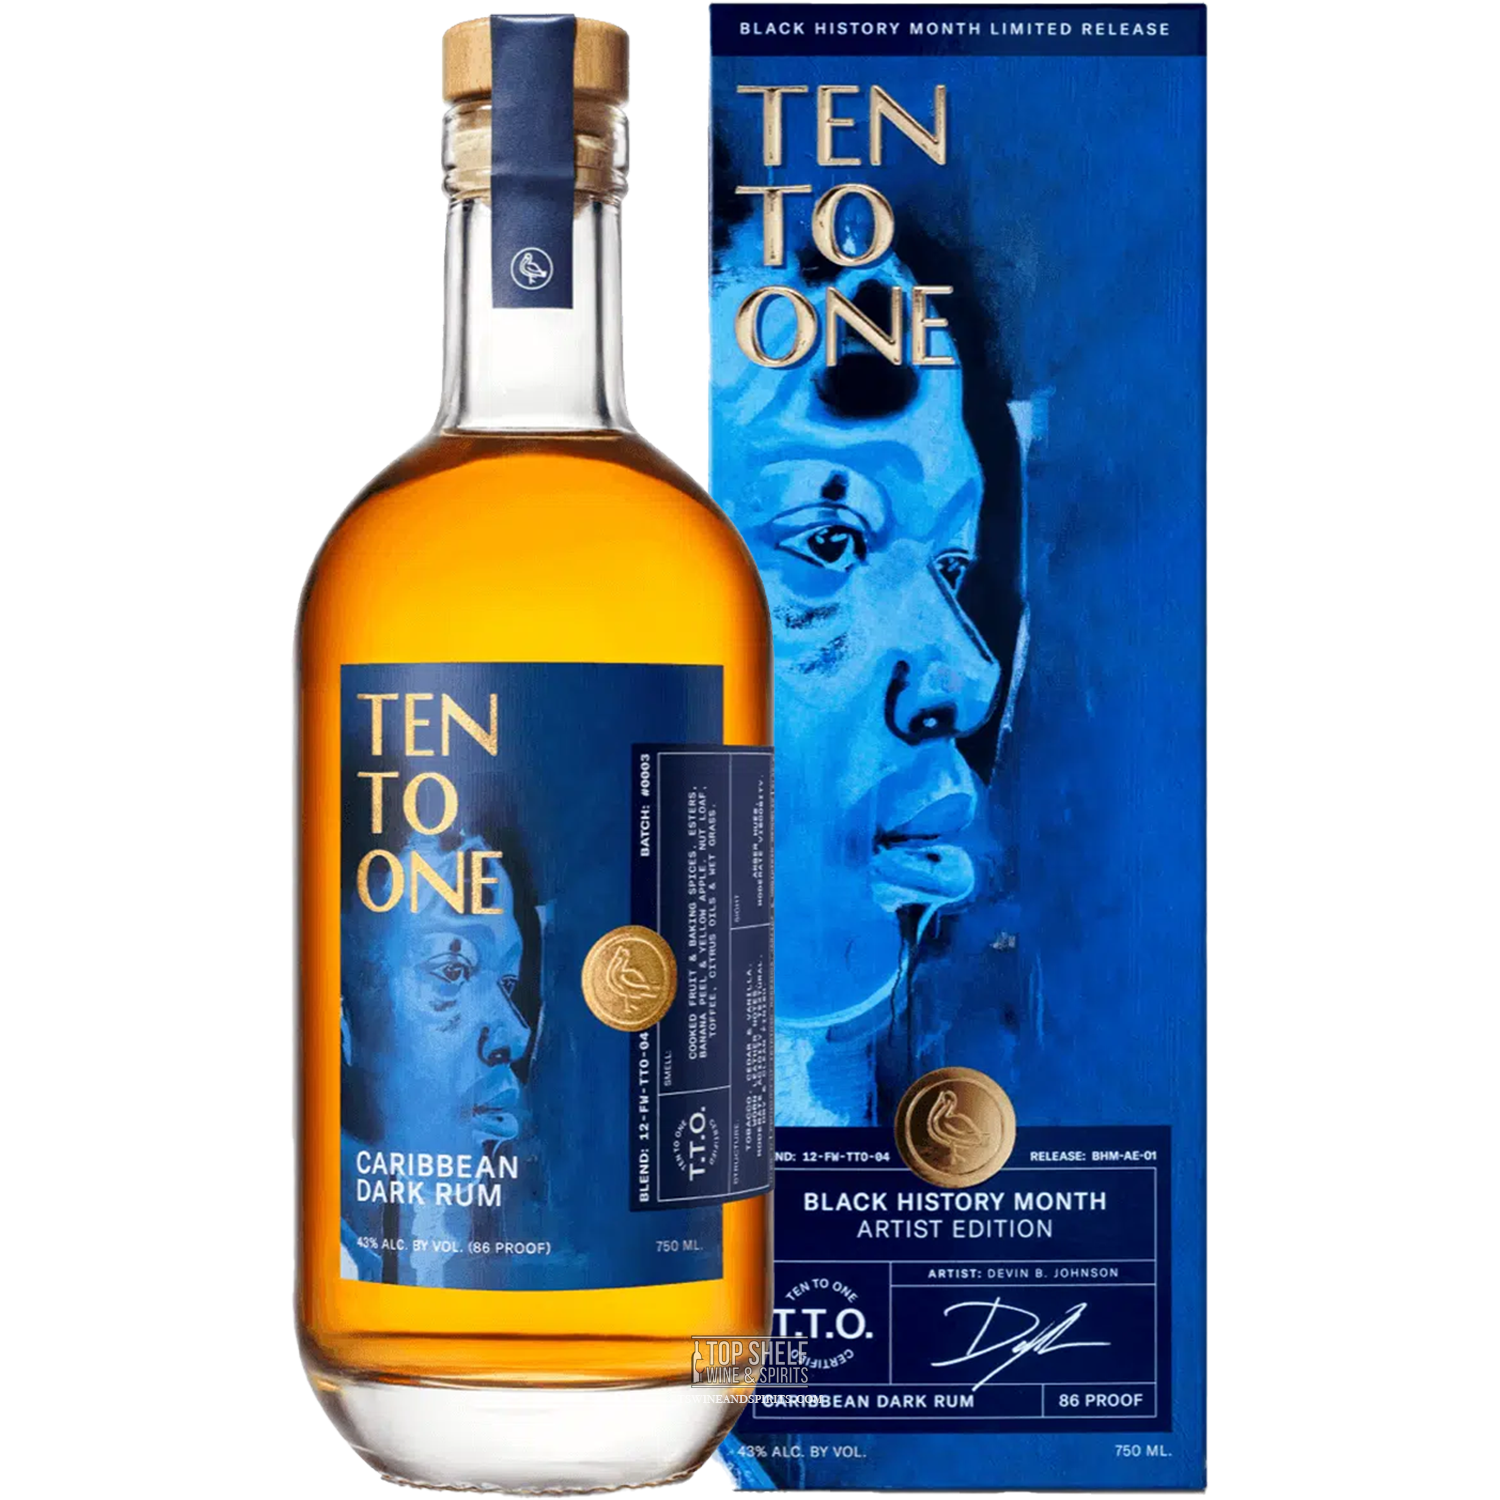 Ten To One Devin B. Johnson Caribbean Dark Rum (Black History Month Edition)